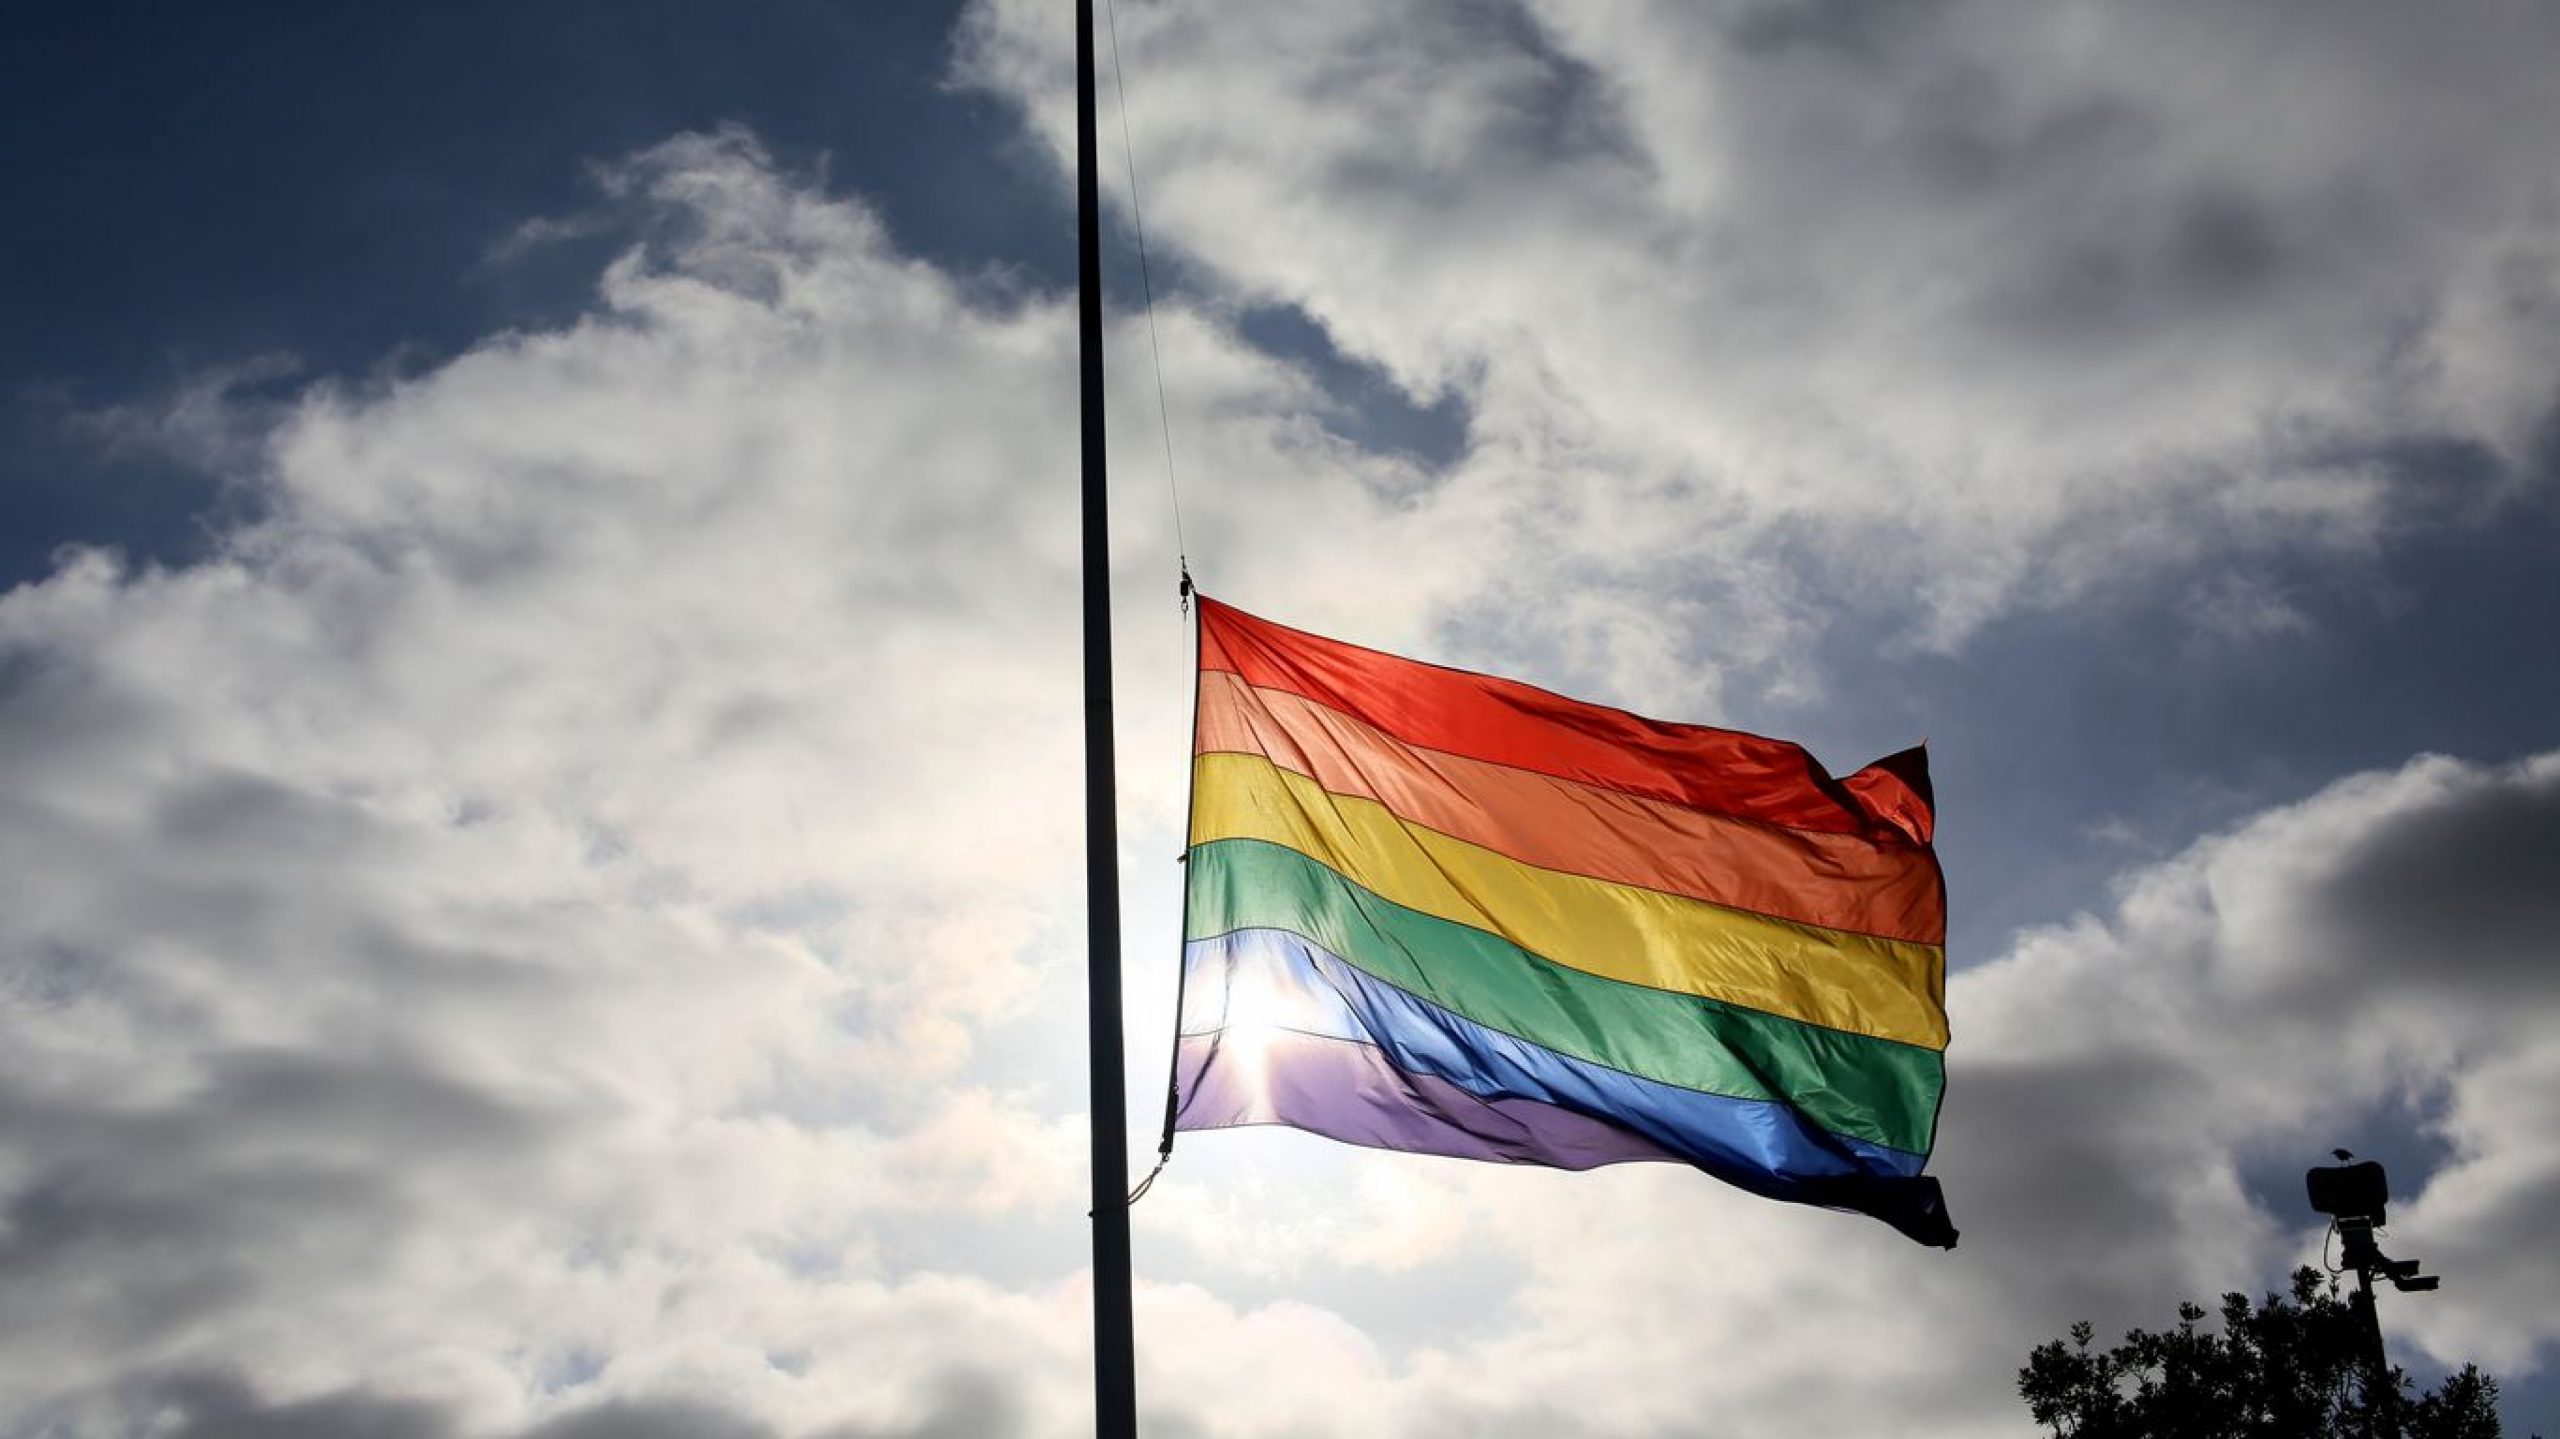 1 dead, 2 injured after pickup truck hits Pride spectators in Florida